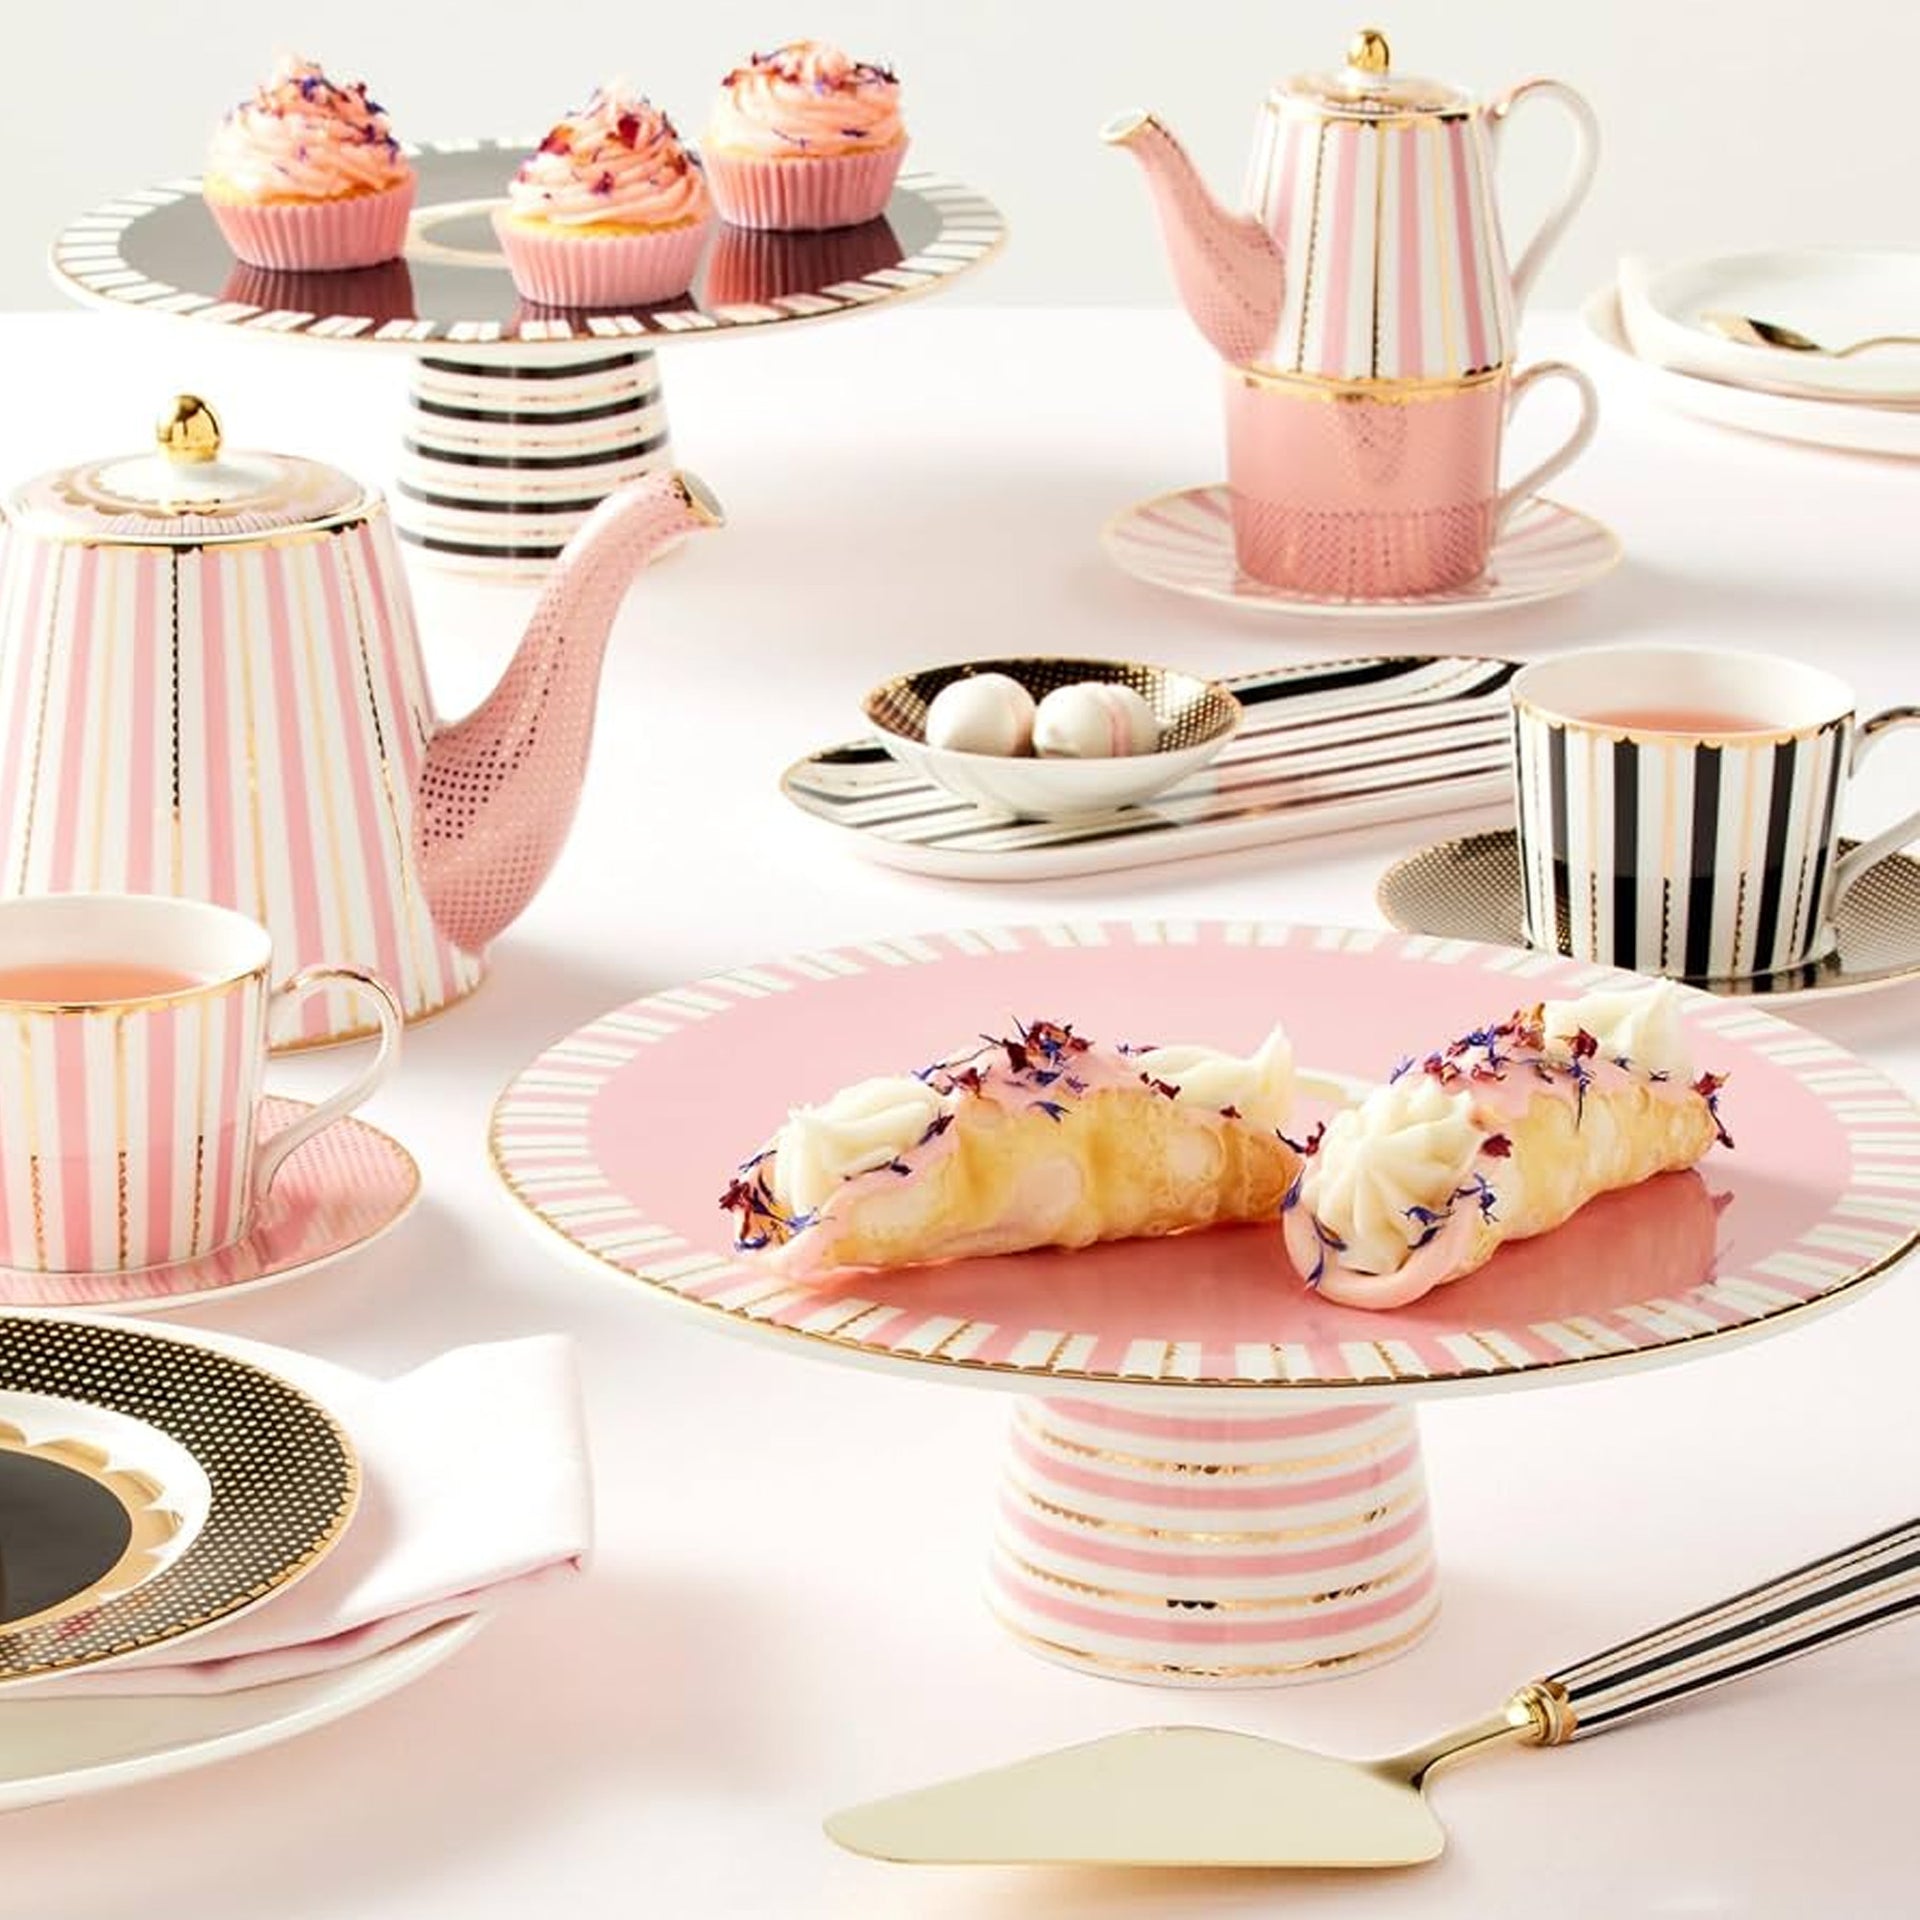 Maxwell & Williams Teas & Cs 1Lt Regency Teapot With Infuser Pink